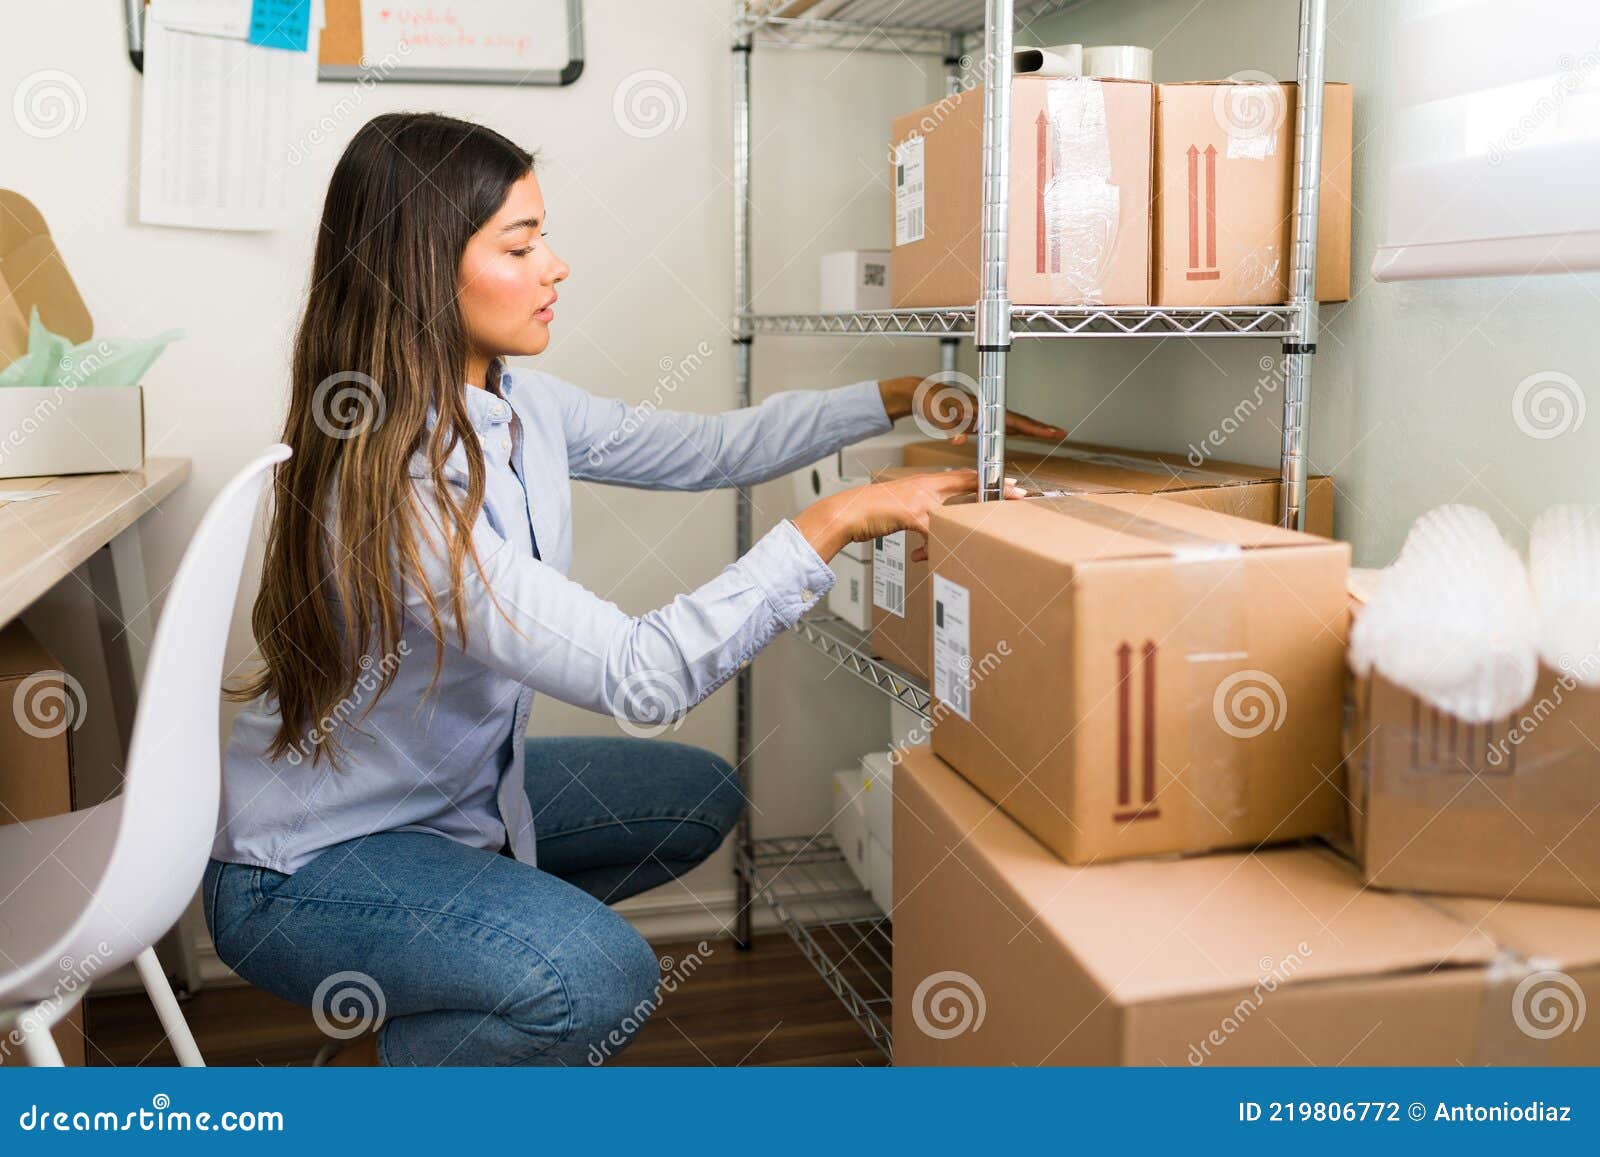 female entrepreneur preparing to ship packages